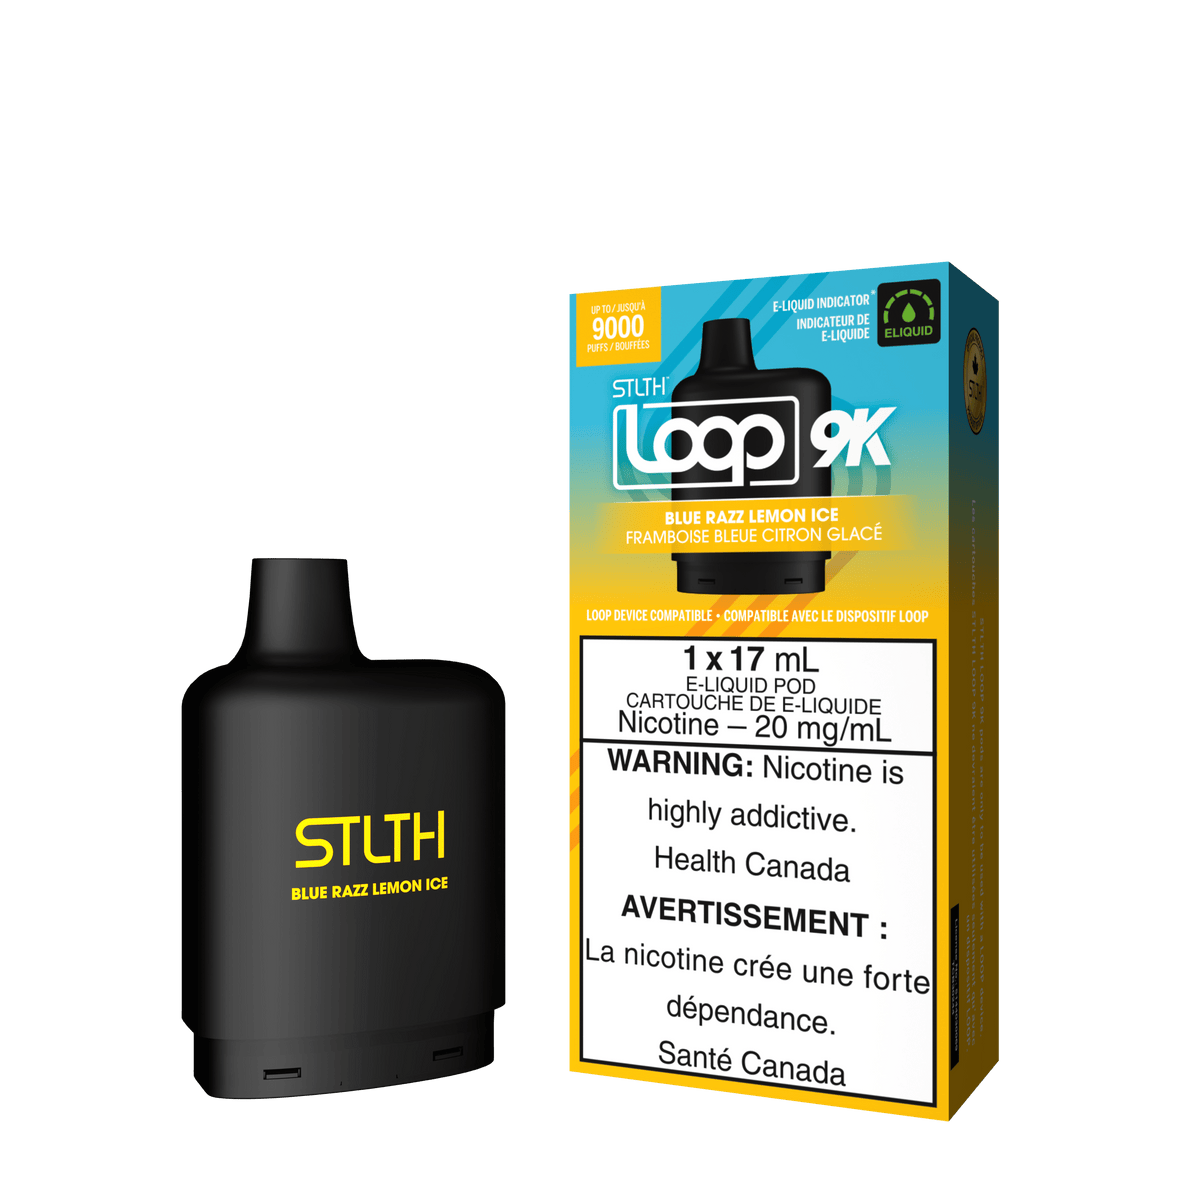 STLTH Loop 9K Pod - Blue Razz Lemon Ice available on Canada online vape shop